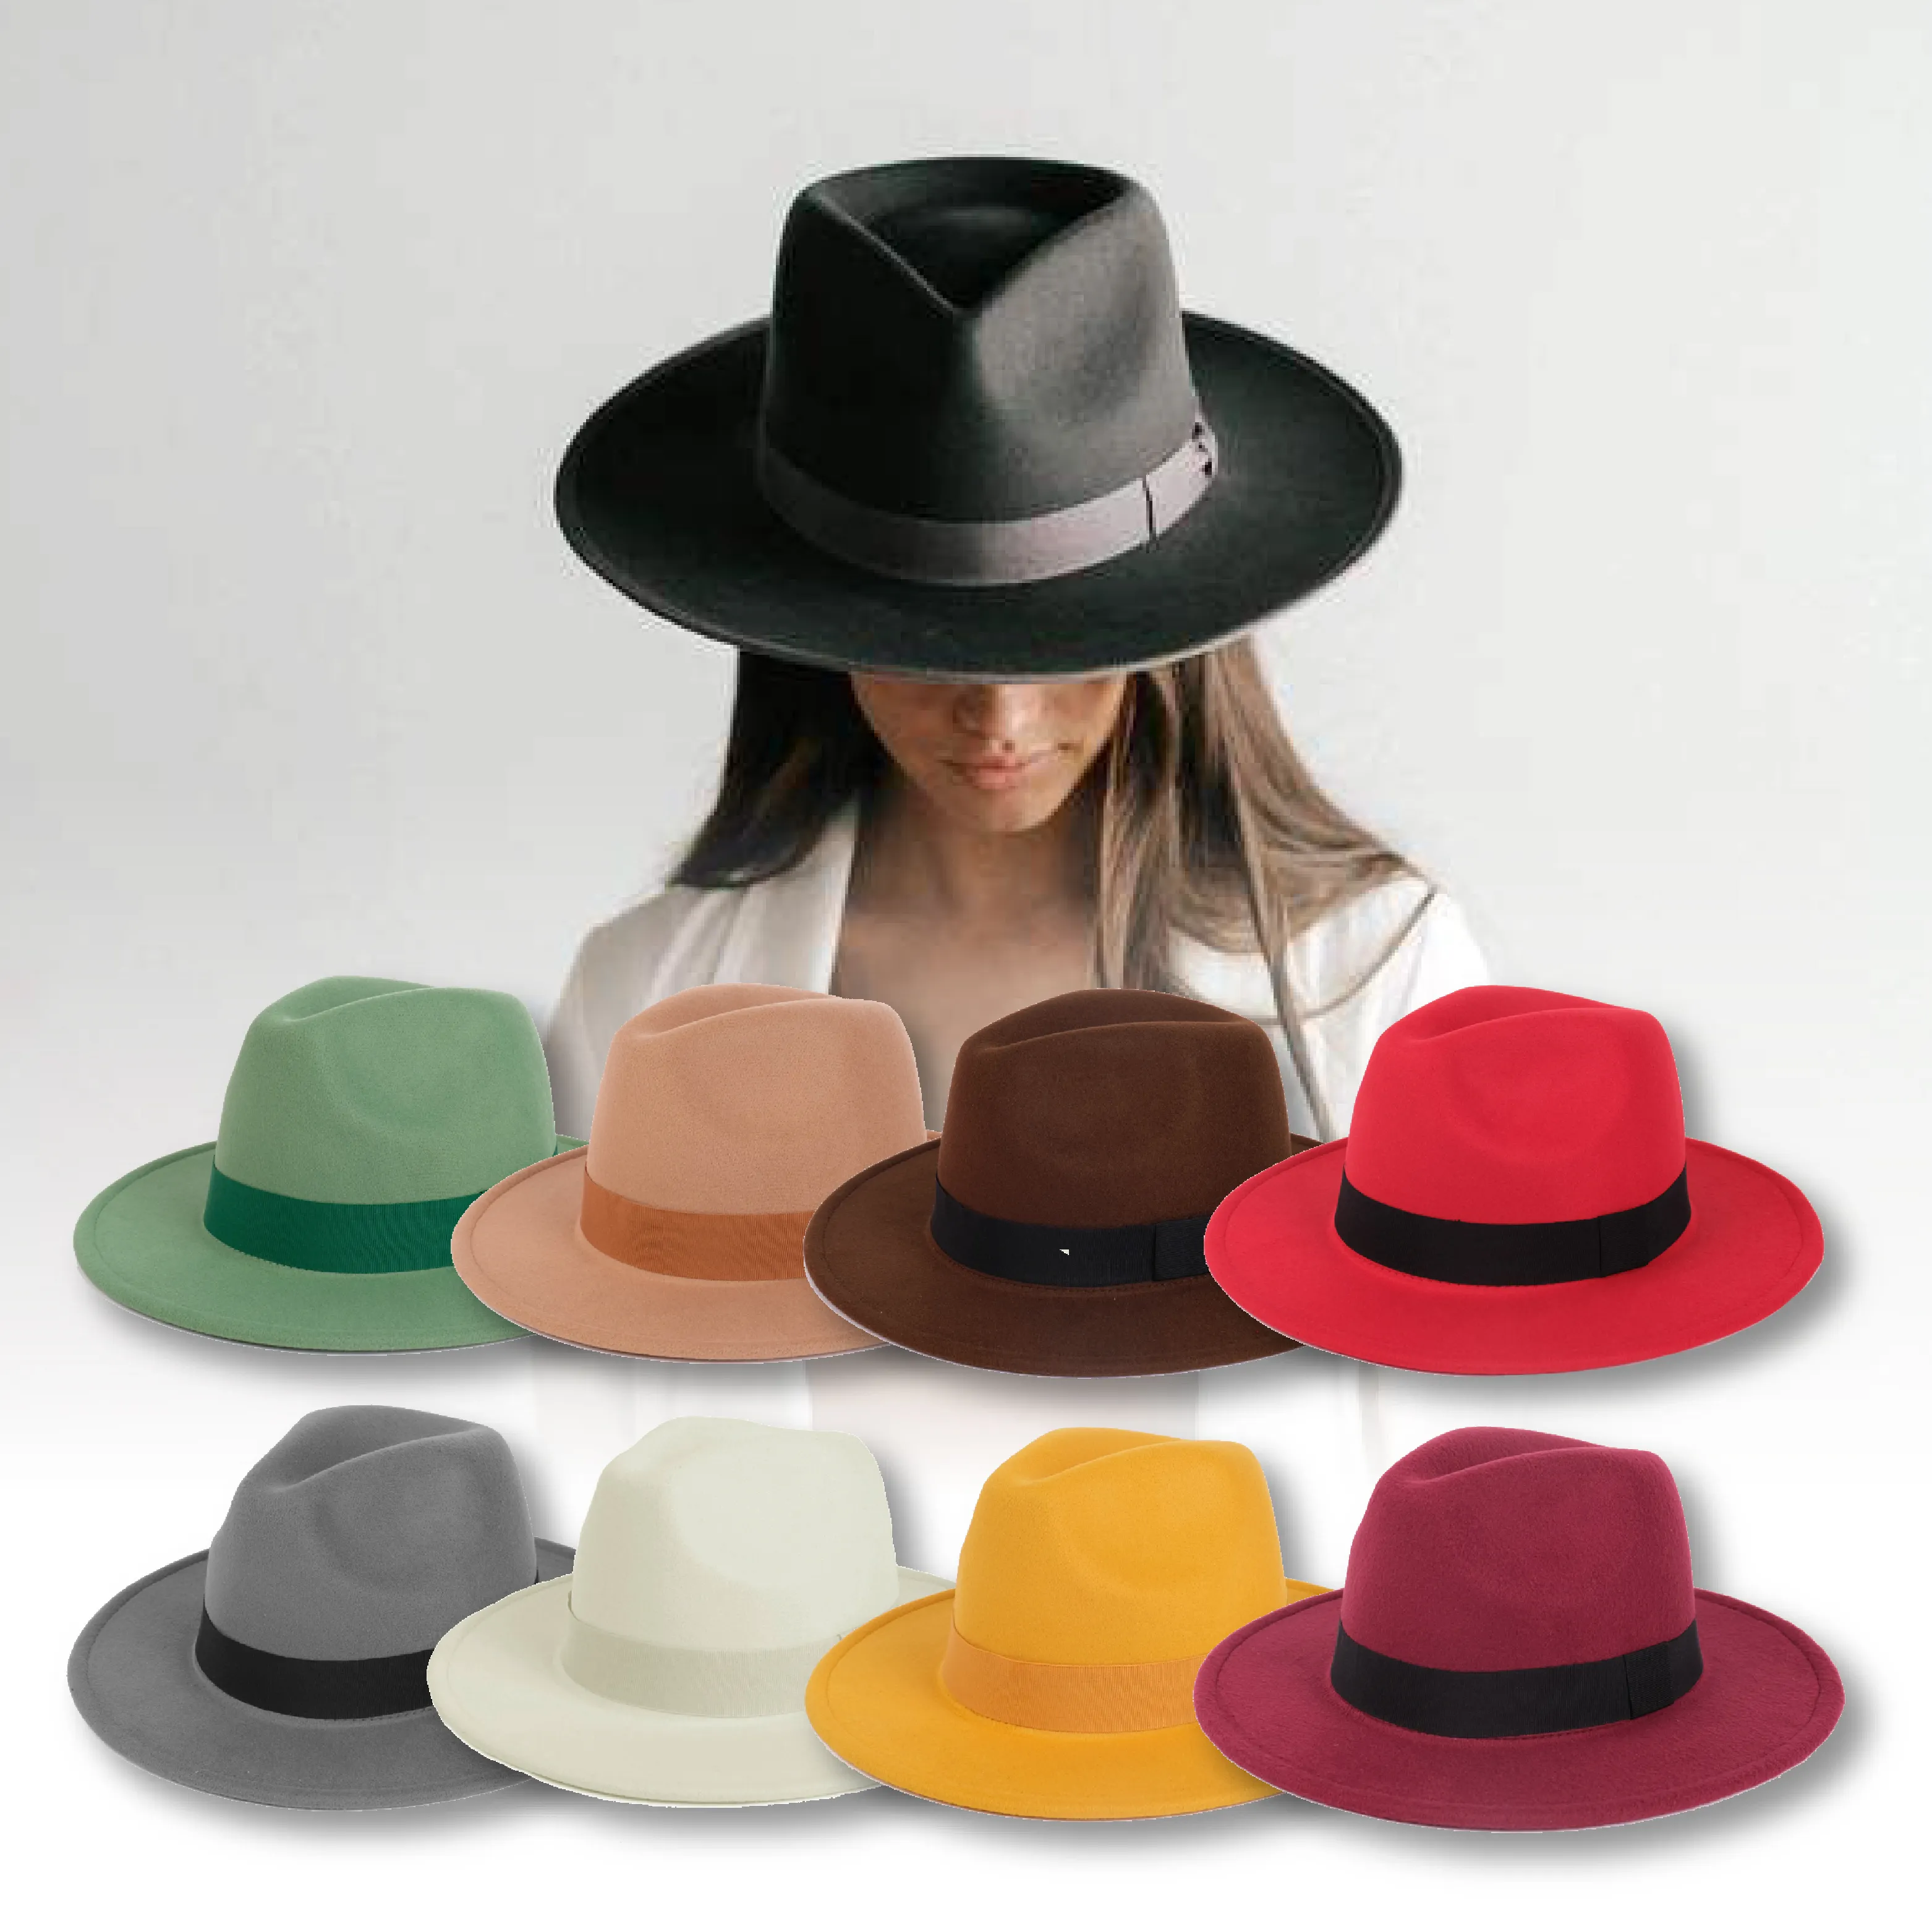 Chapéus de feltro coloridos, chapéus femininos elegantes com fita